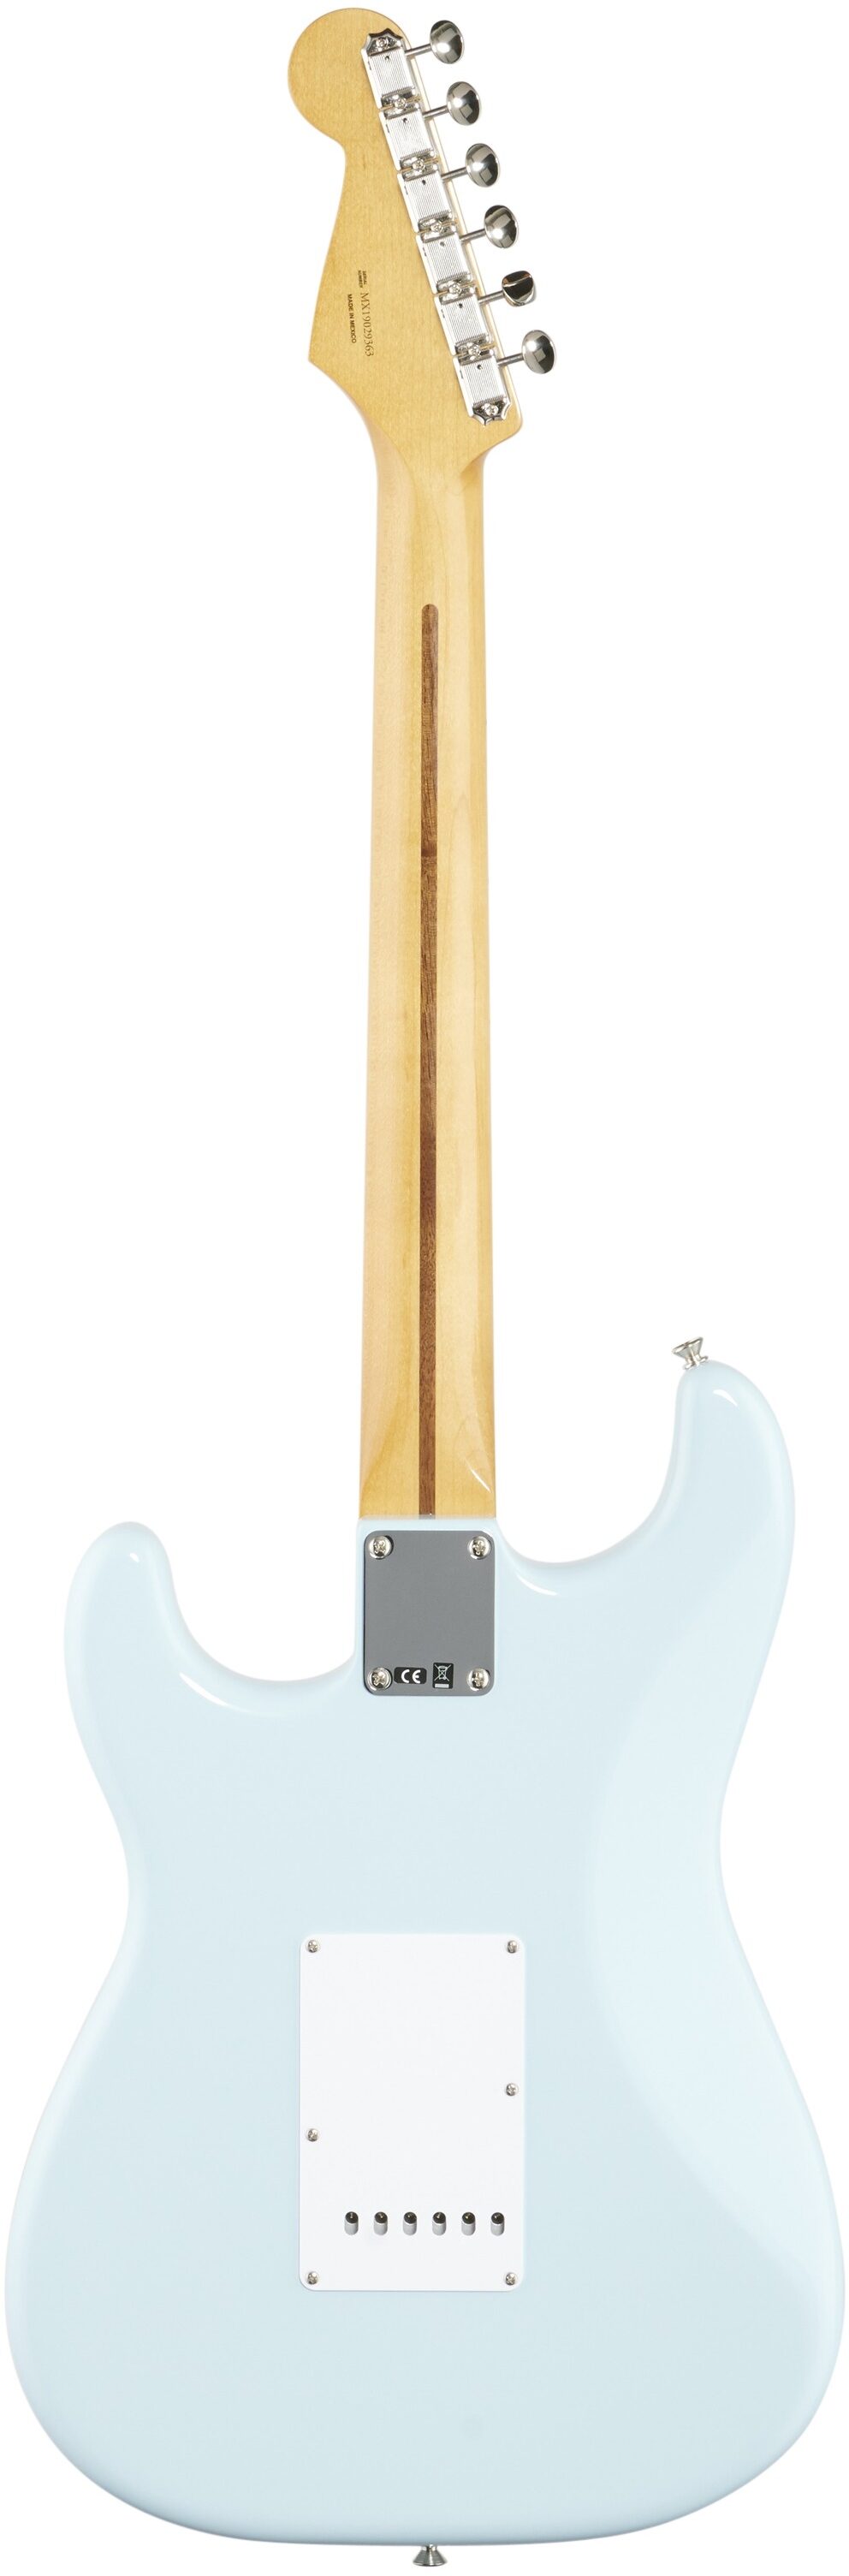 Fender Vintera '50s Stratocaster Electric Guitar, Maple Fretboard